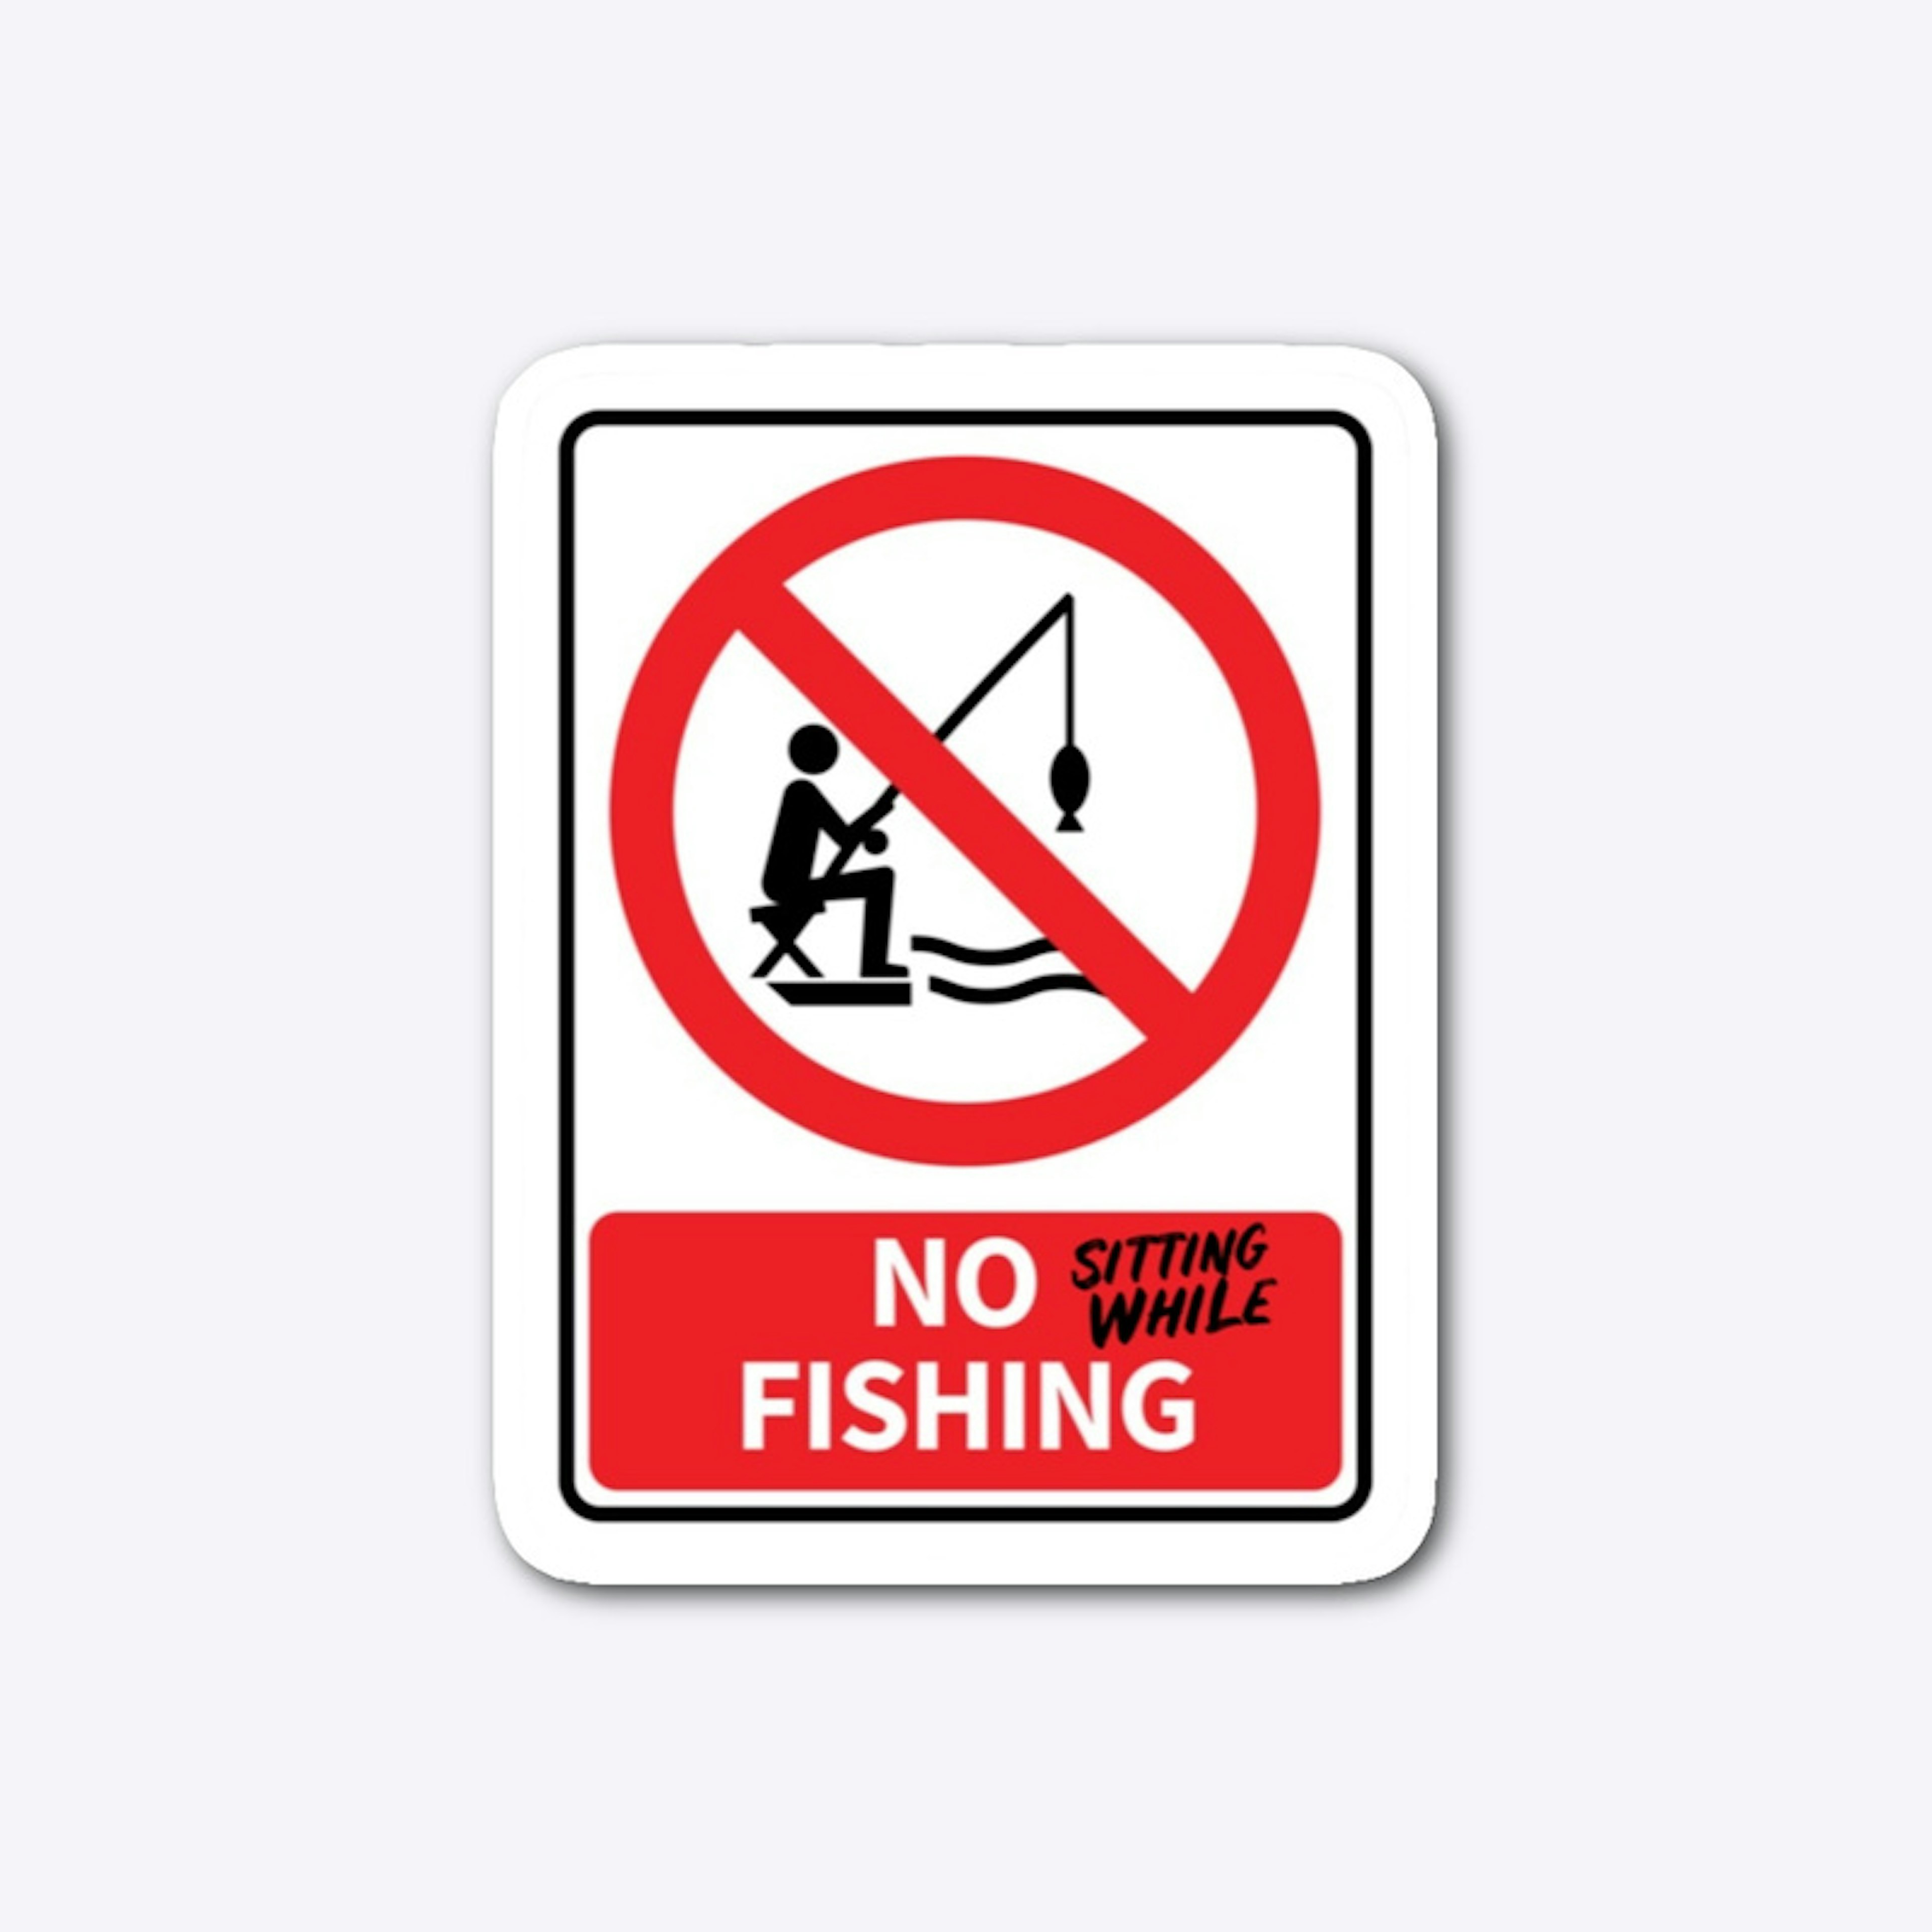 NO sitting while FISHING 